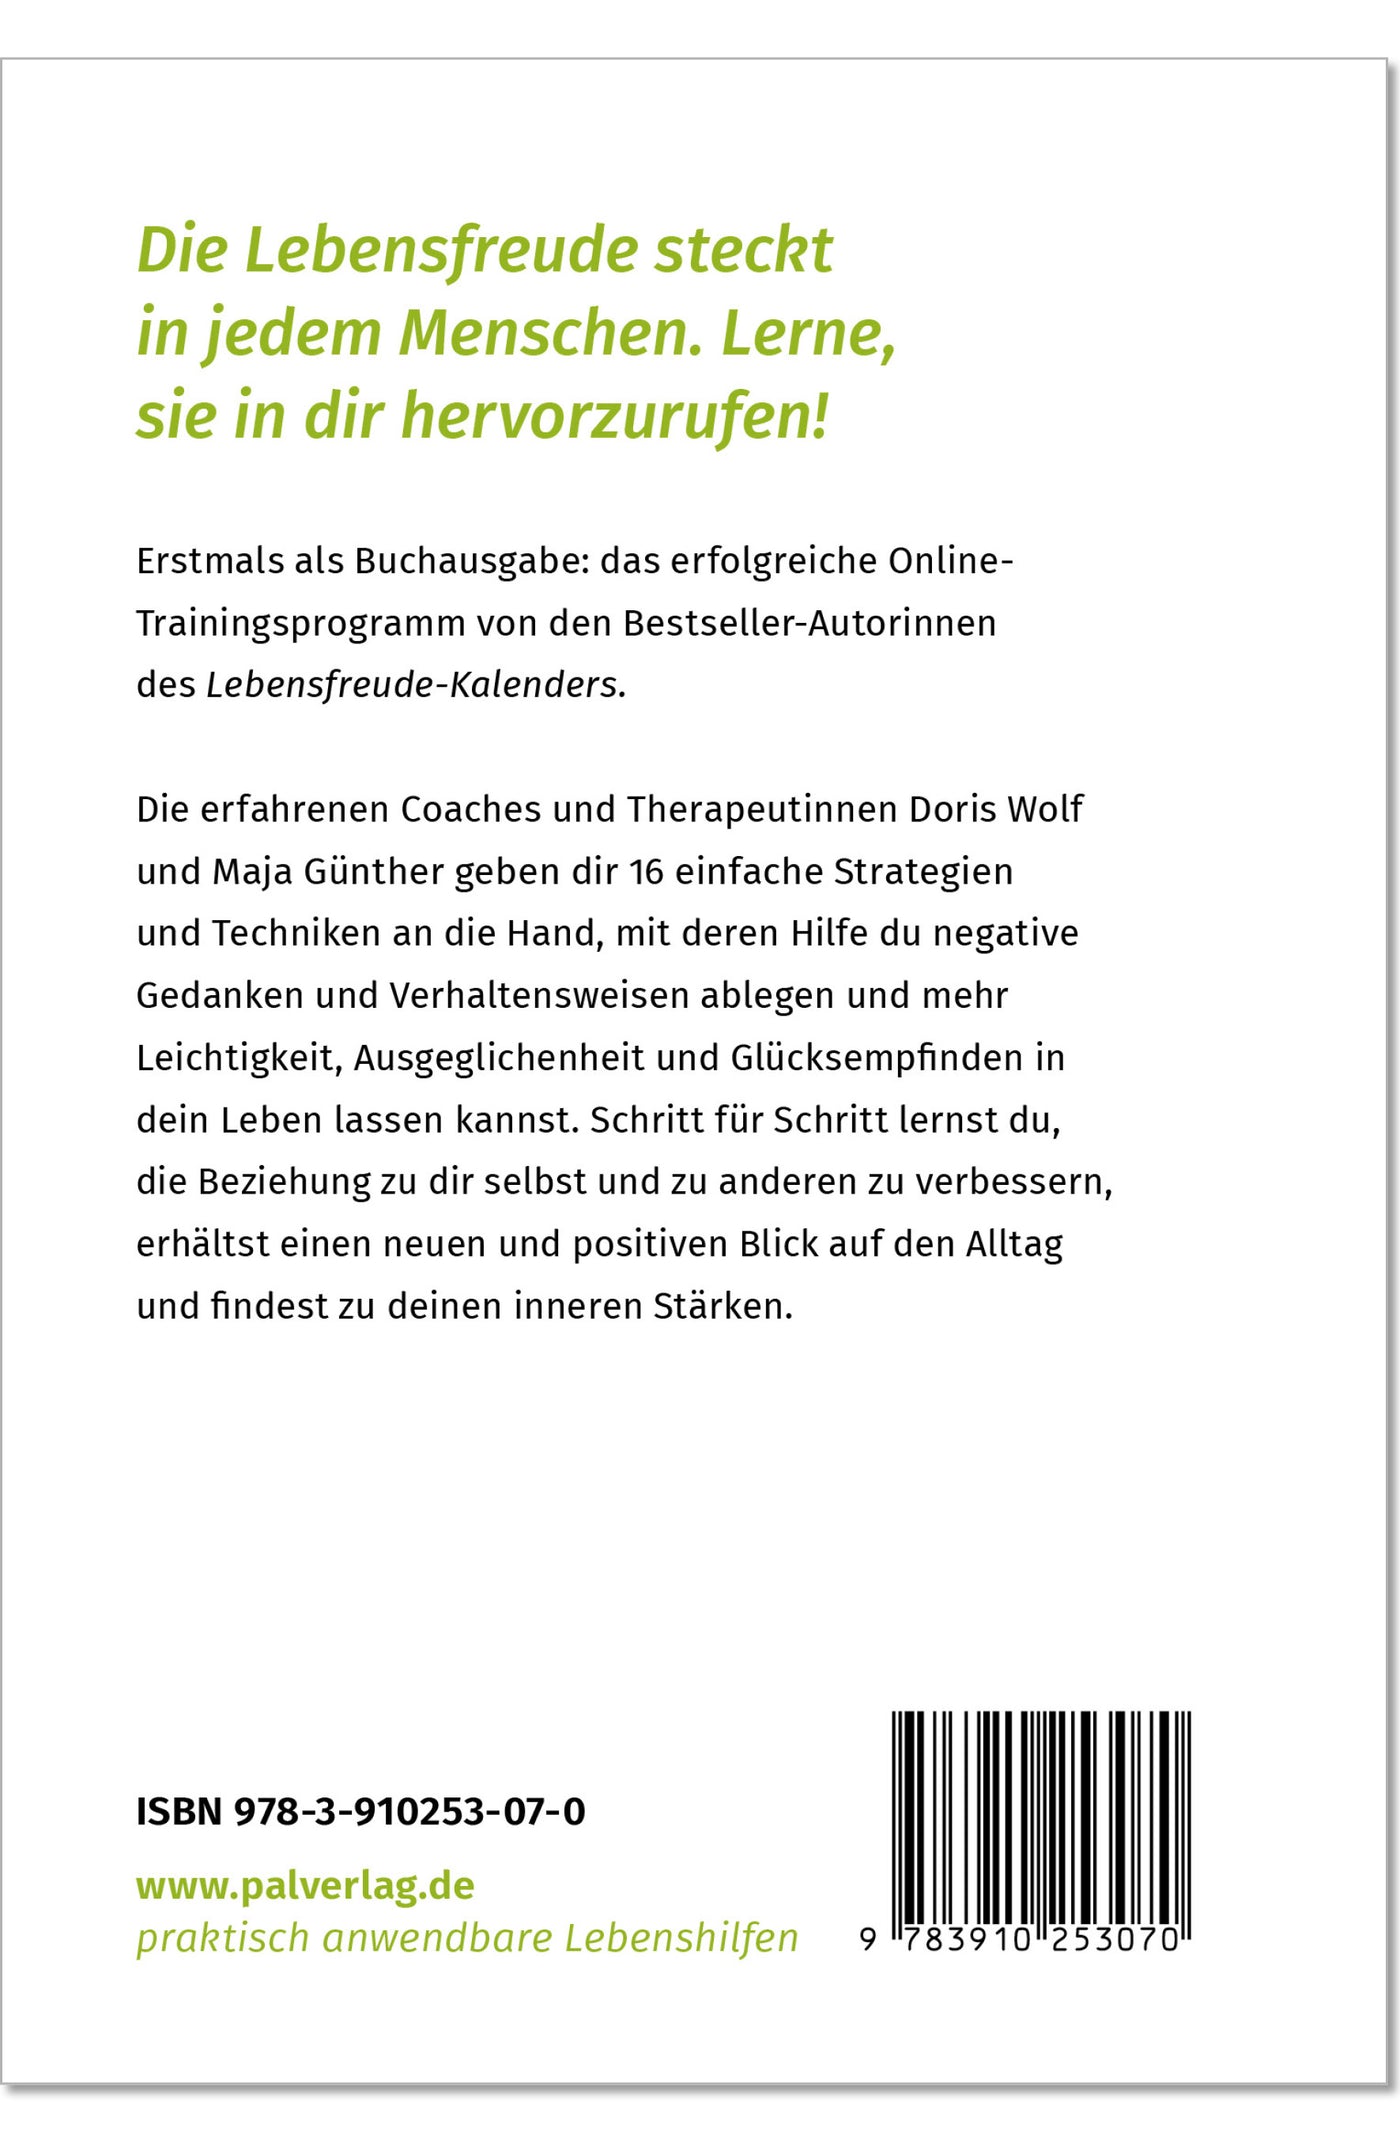 PAL Verlag Doris Wolf Maja Günther Guenther Lebensfreude Training Tipps Glücksempfinden Vitalität Rückseite